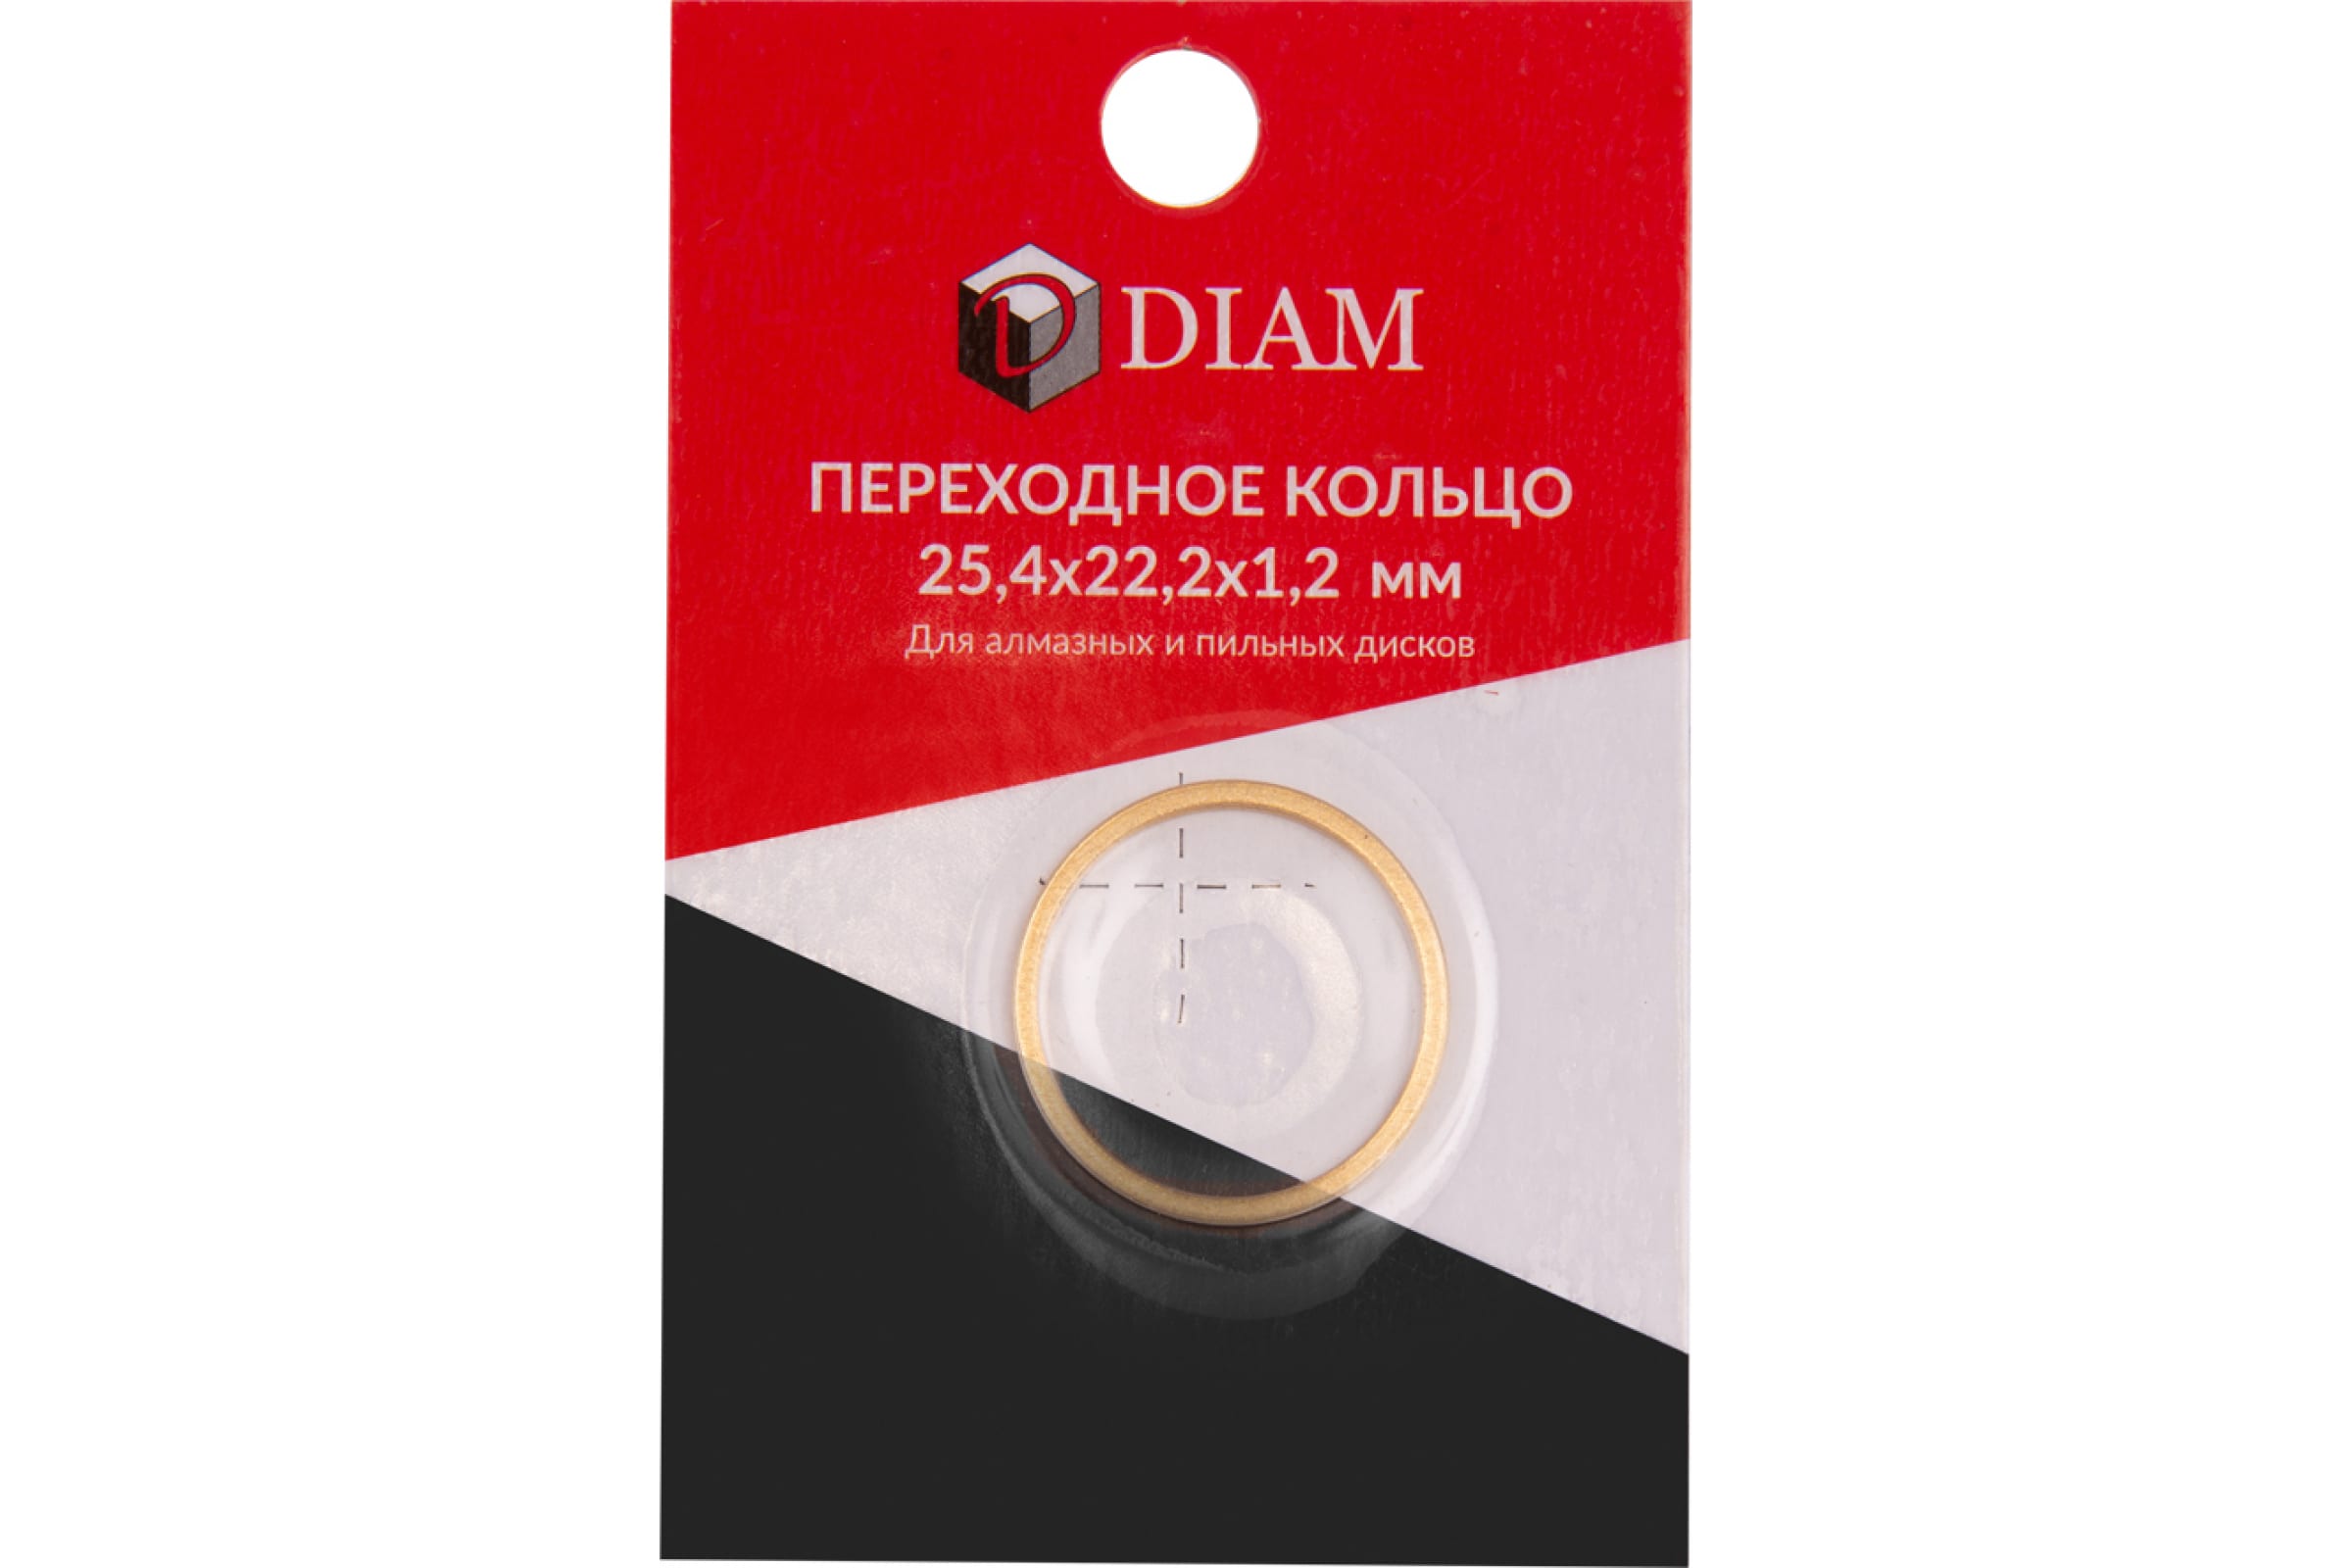 DIAM Переходное кольцо 25,4х22,2х1,2 640084 переходное кольцо 25 4x22 2 мм